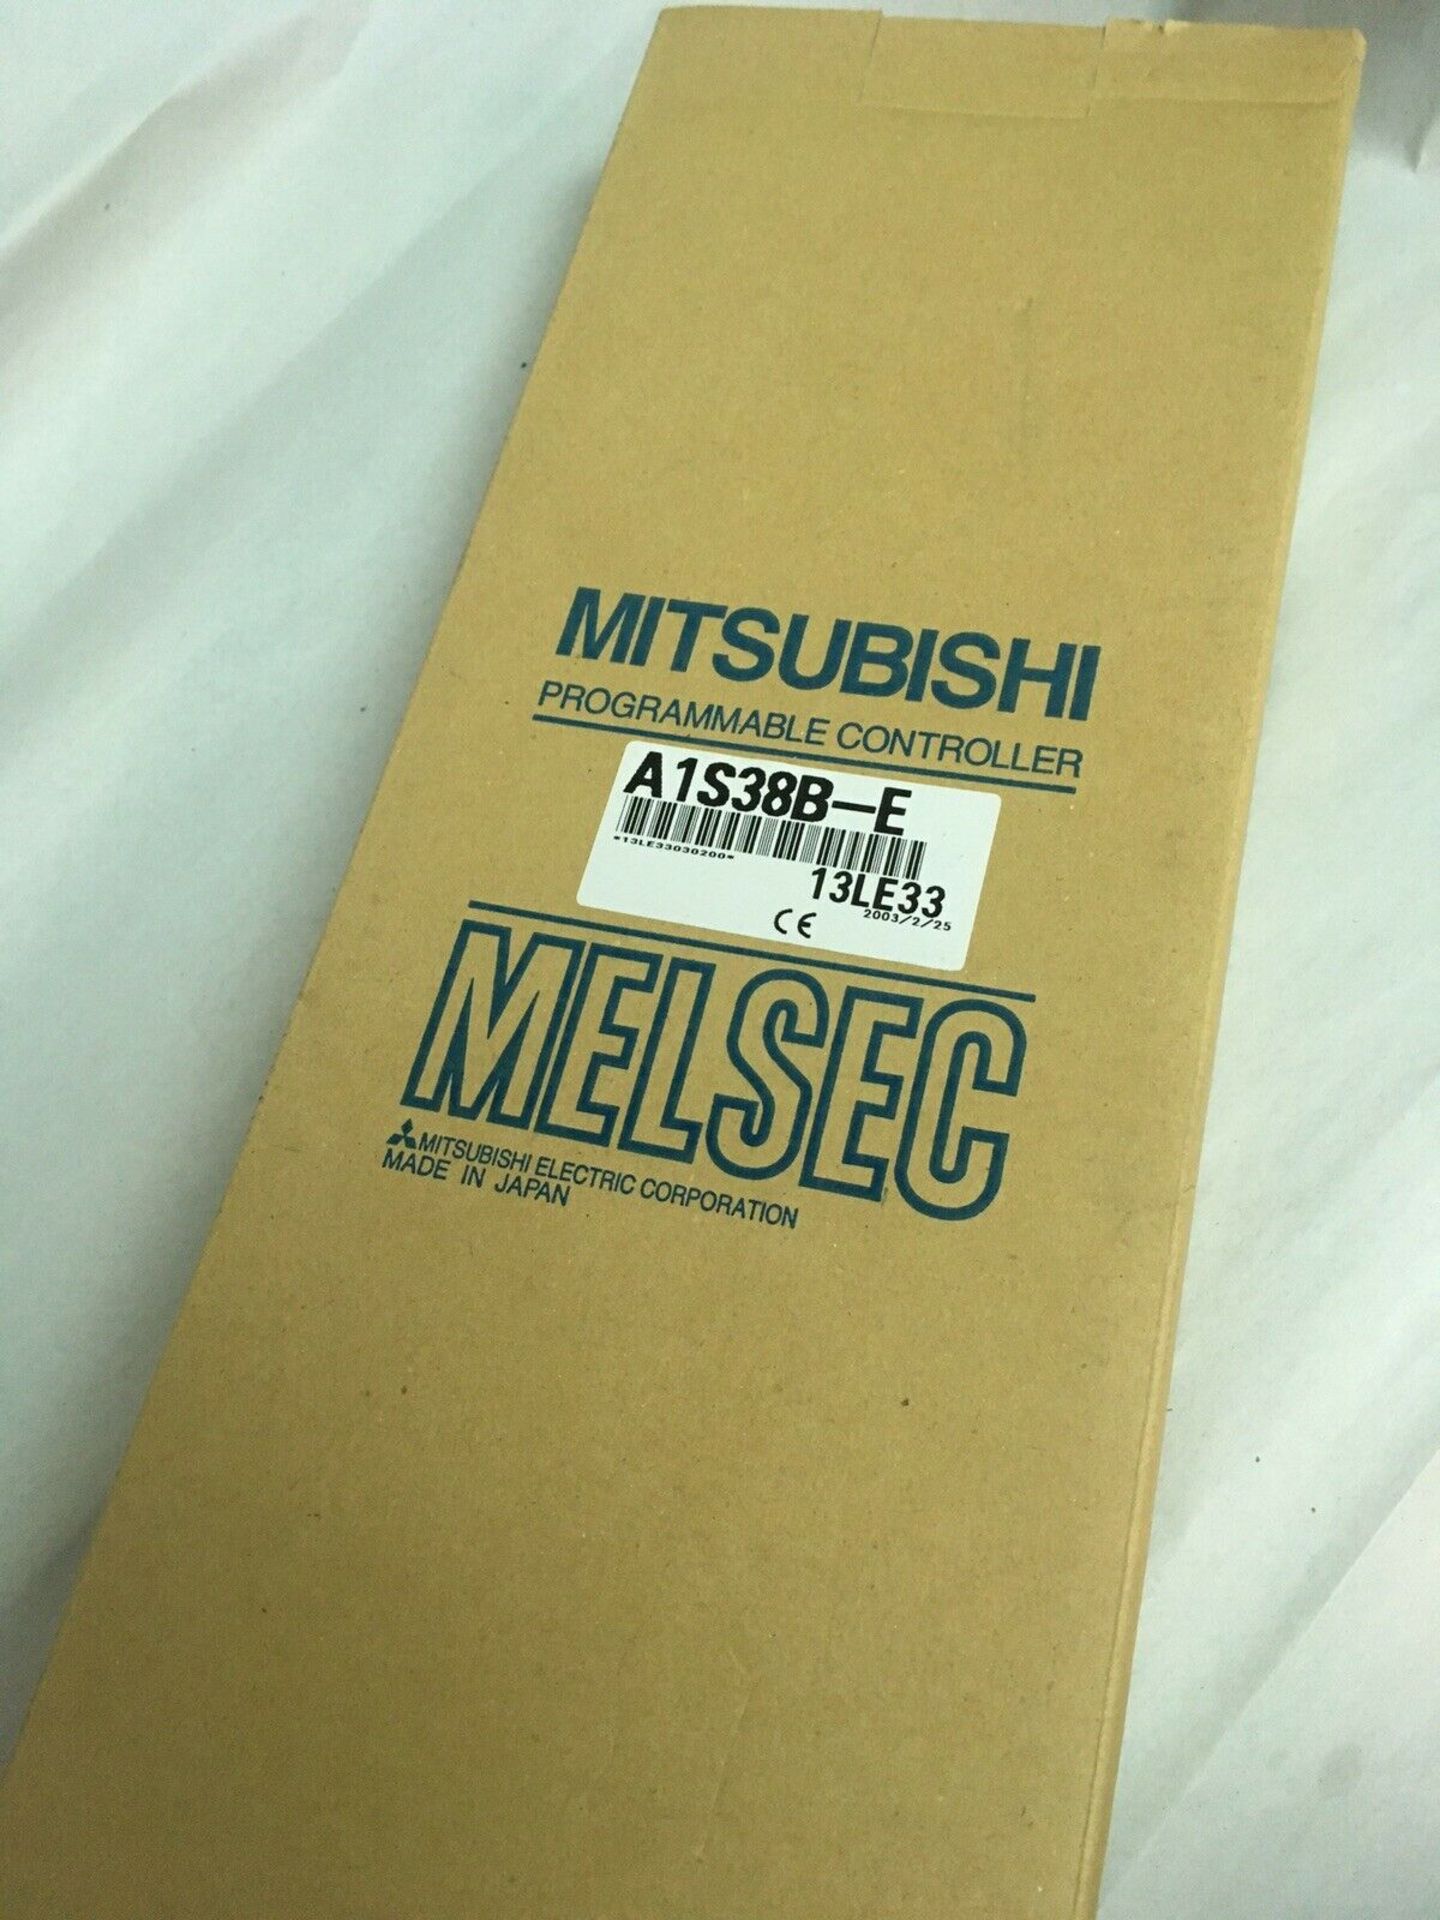 Mitsubishi A1S38b-E Melsec Programmable Controller PLC Rack - Image 2 of 2